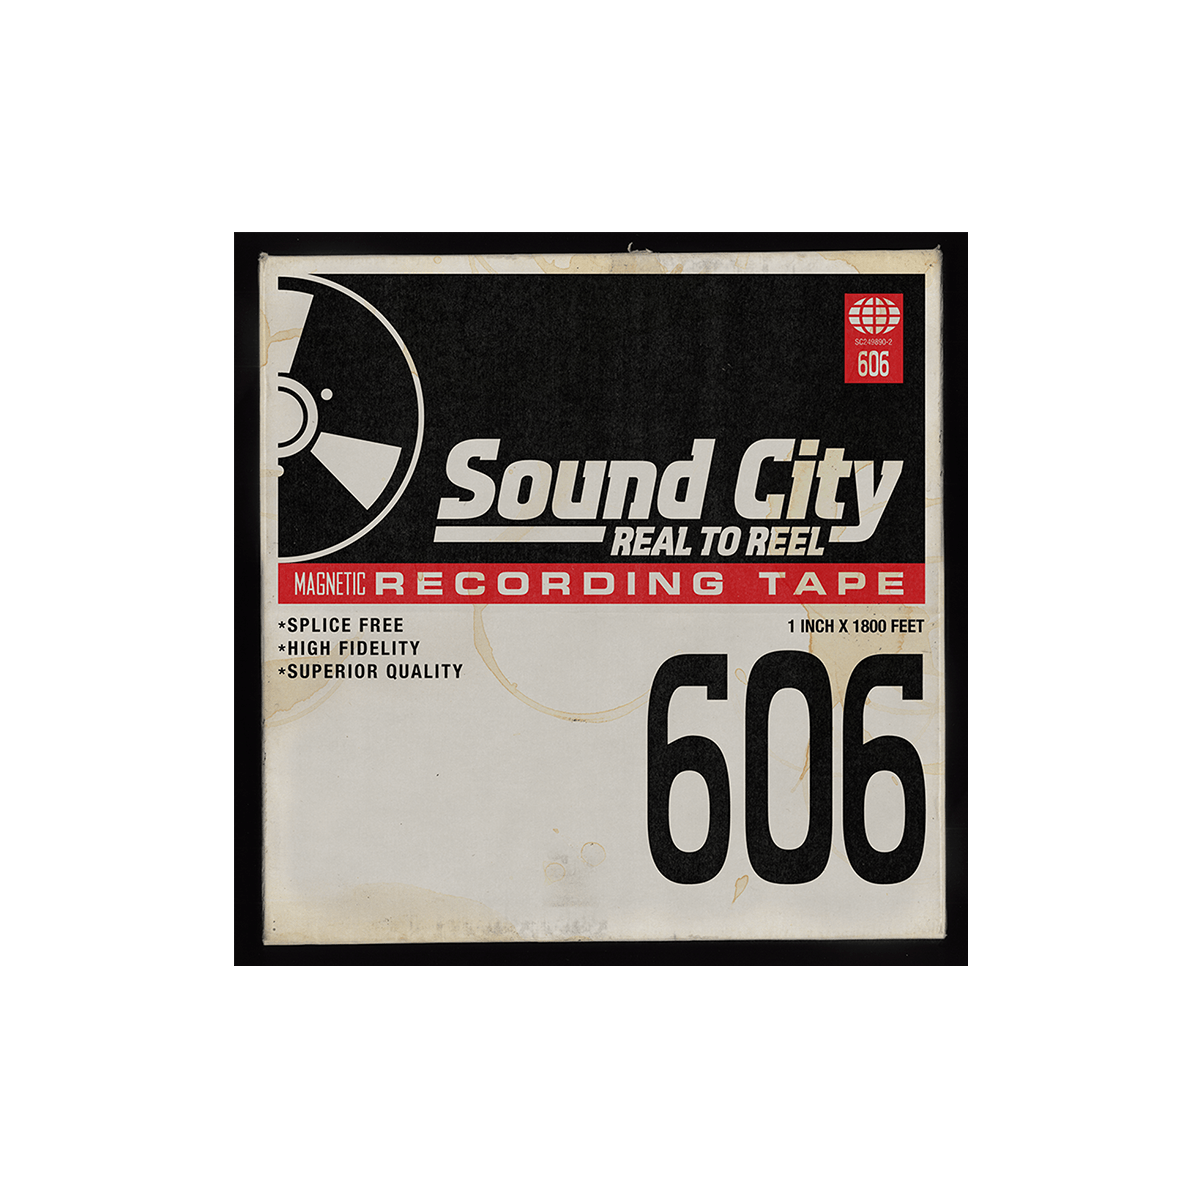 Spiller skak grænseflade Faial Sound City: Real to Reel Vinyl – Foo Fighters Store